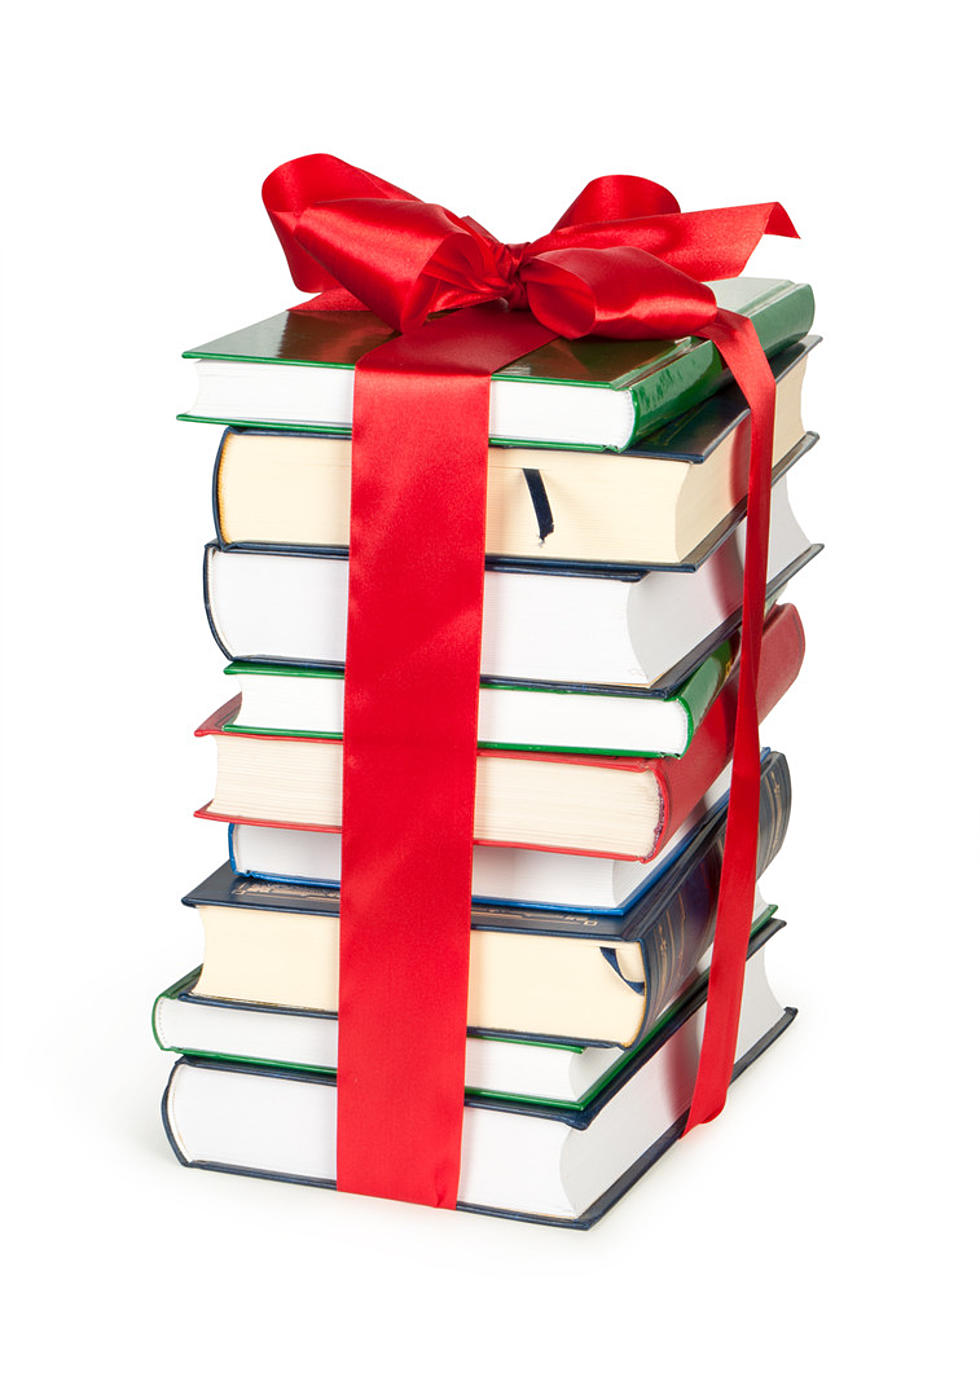 Bangor Public Library Giving Kids A Free Book This Holiday Season